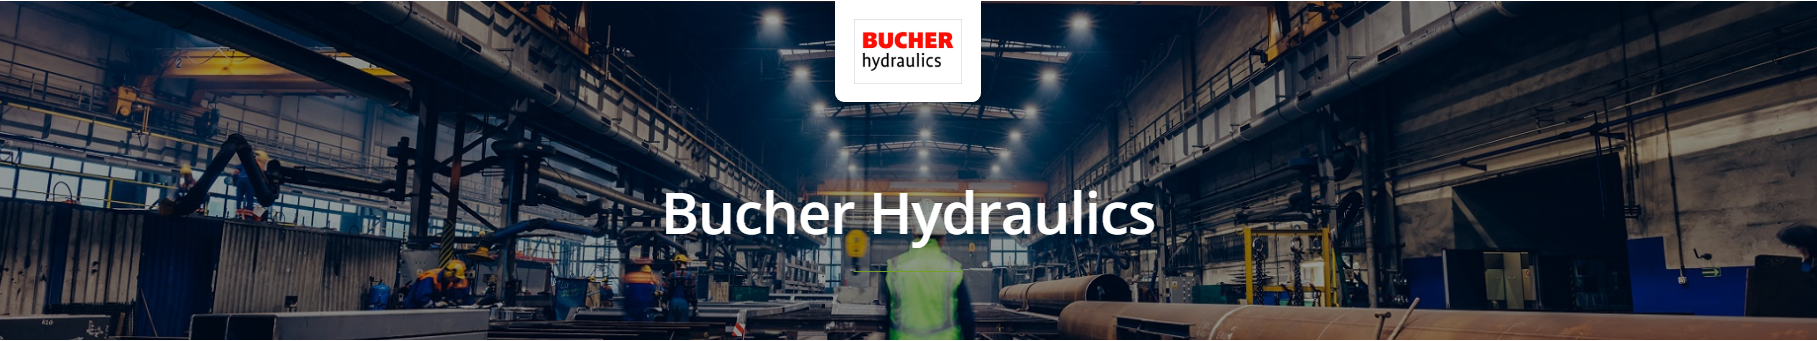 Bucher Hydraulics Electronics